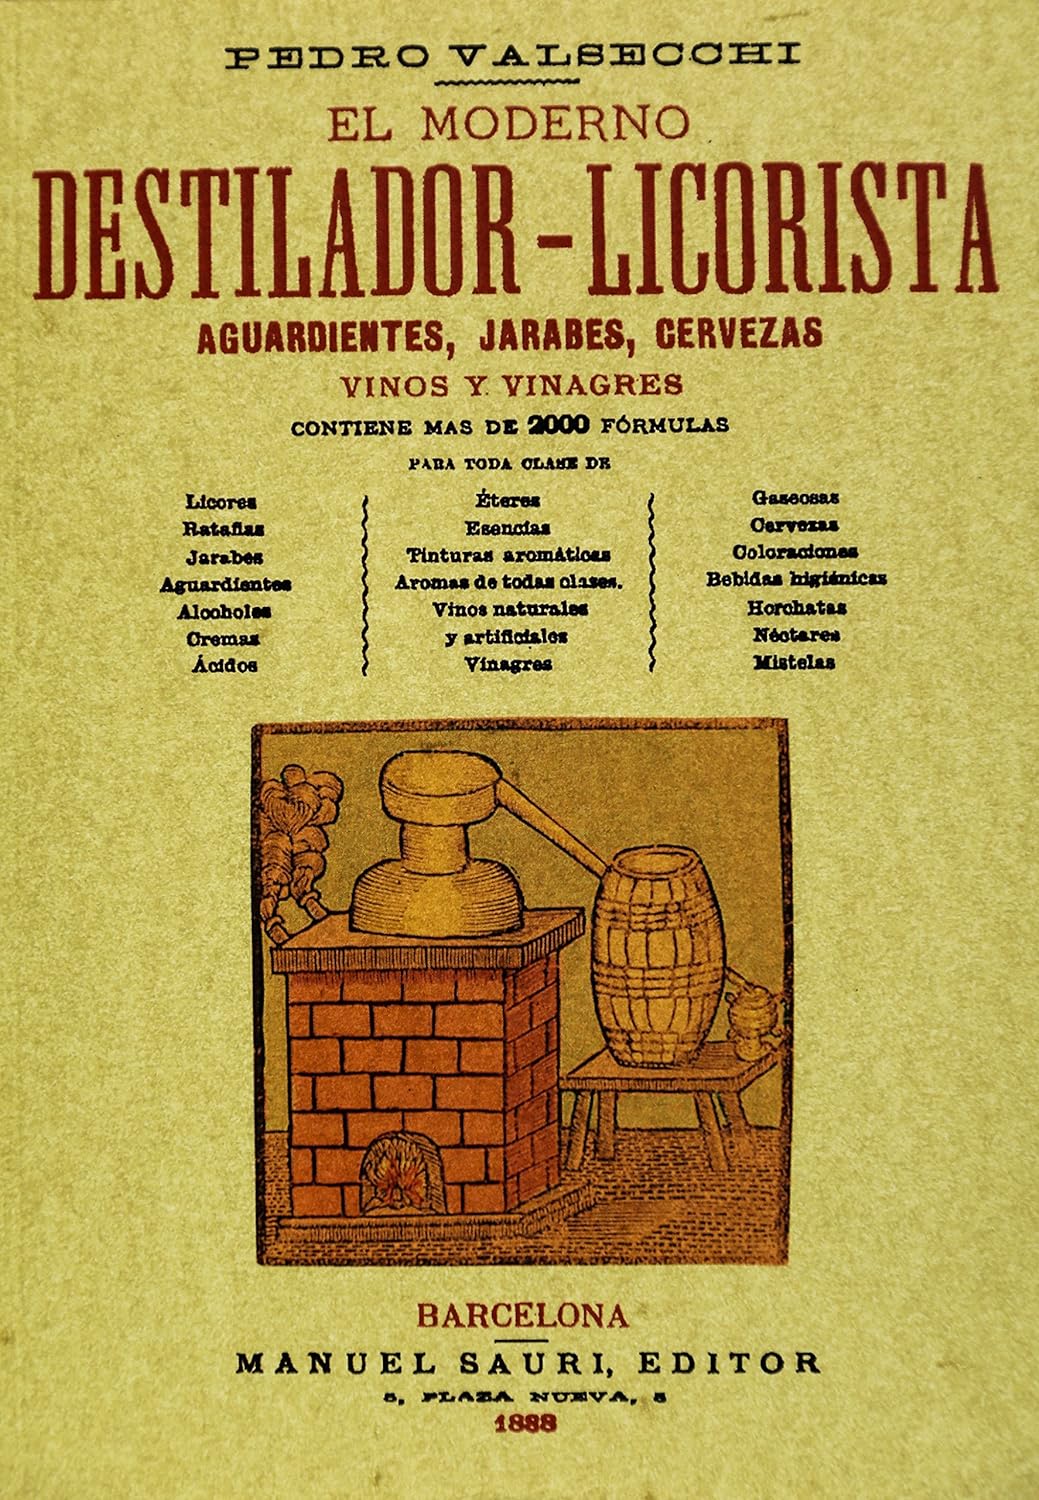 El moderno destilador-licorista (Spanish Edition) Tapa blanda